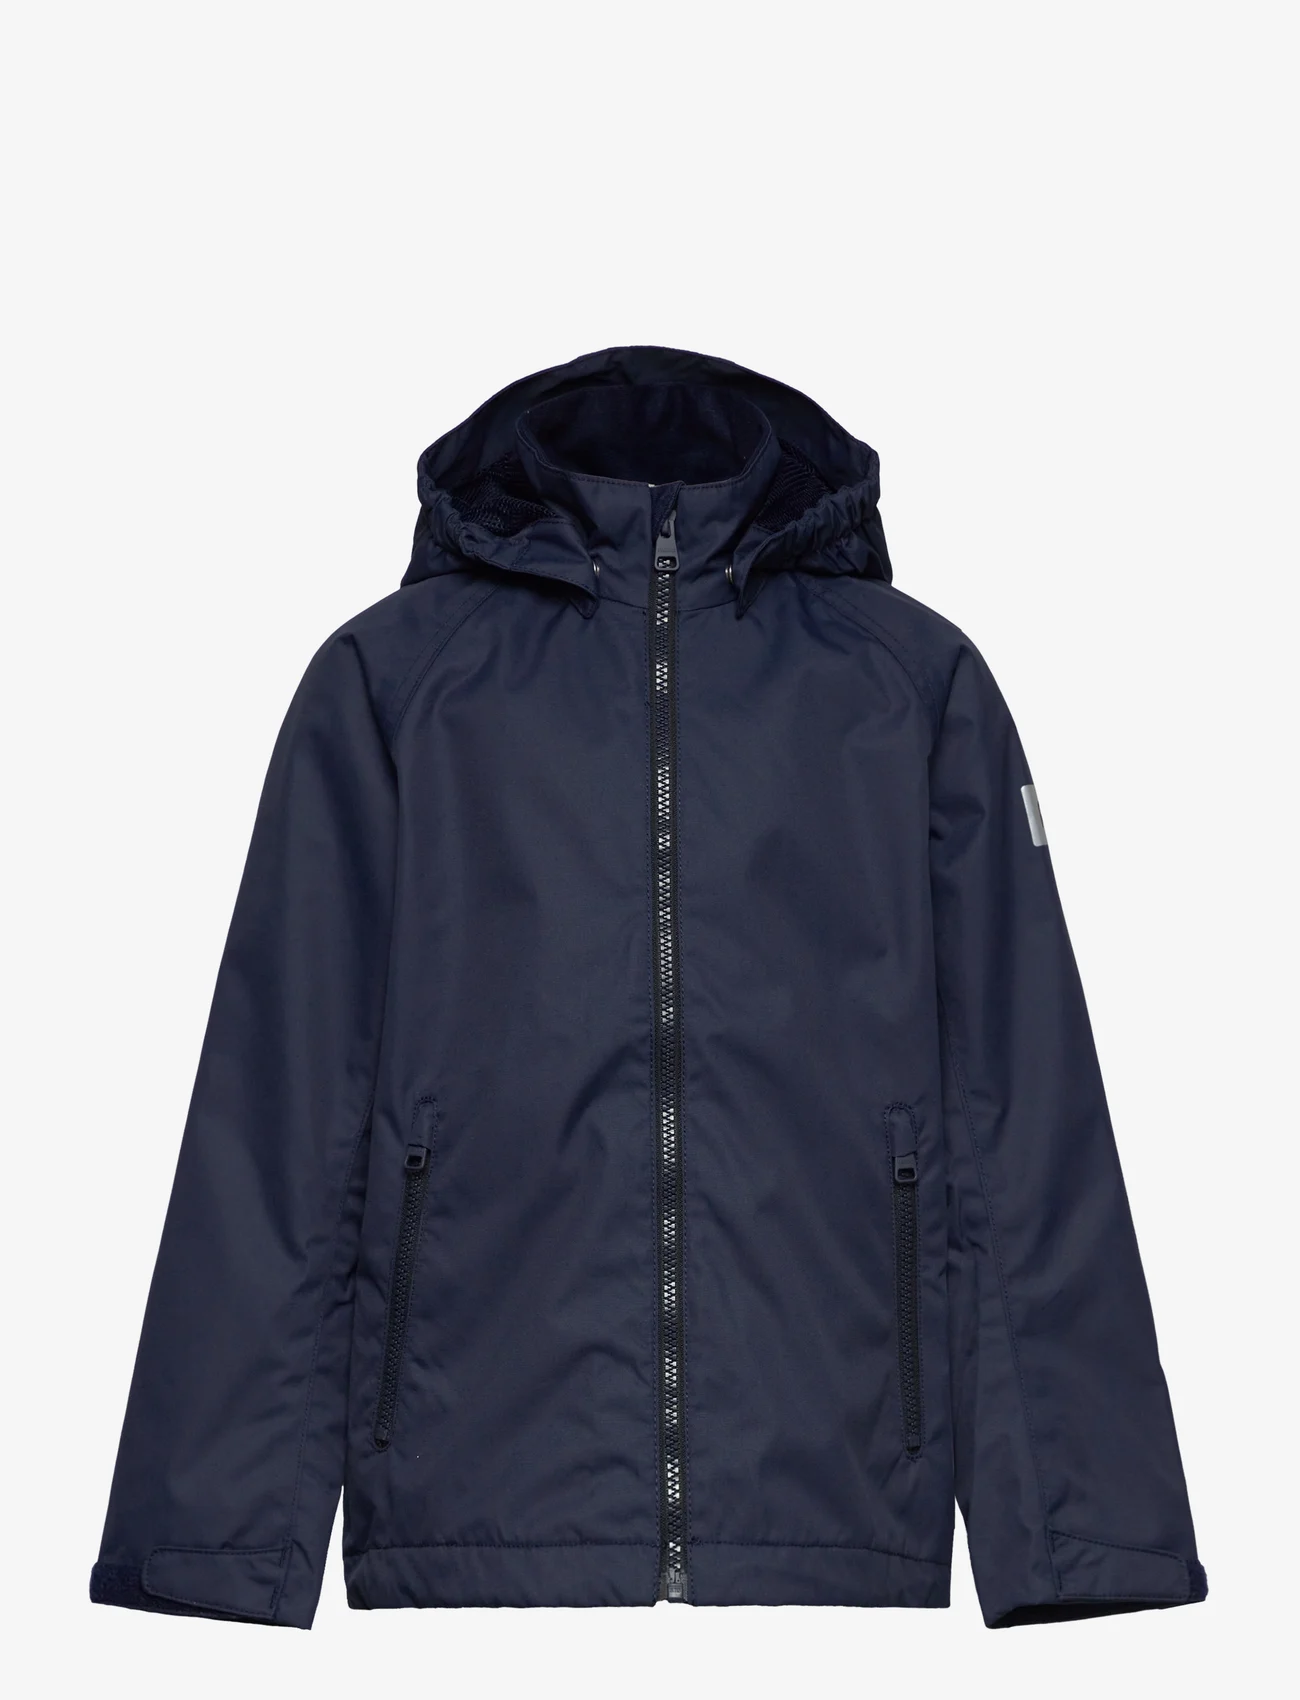 Reima - Reimatec jacket, Soutu - outdoor - navy - 0